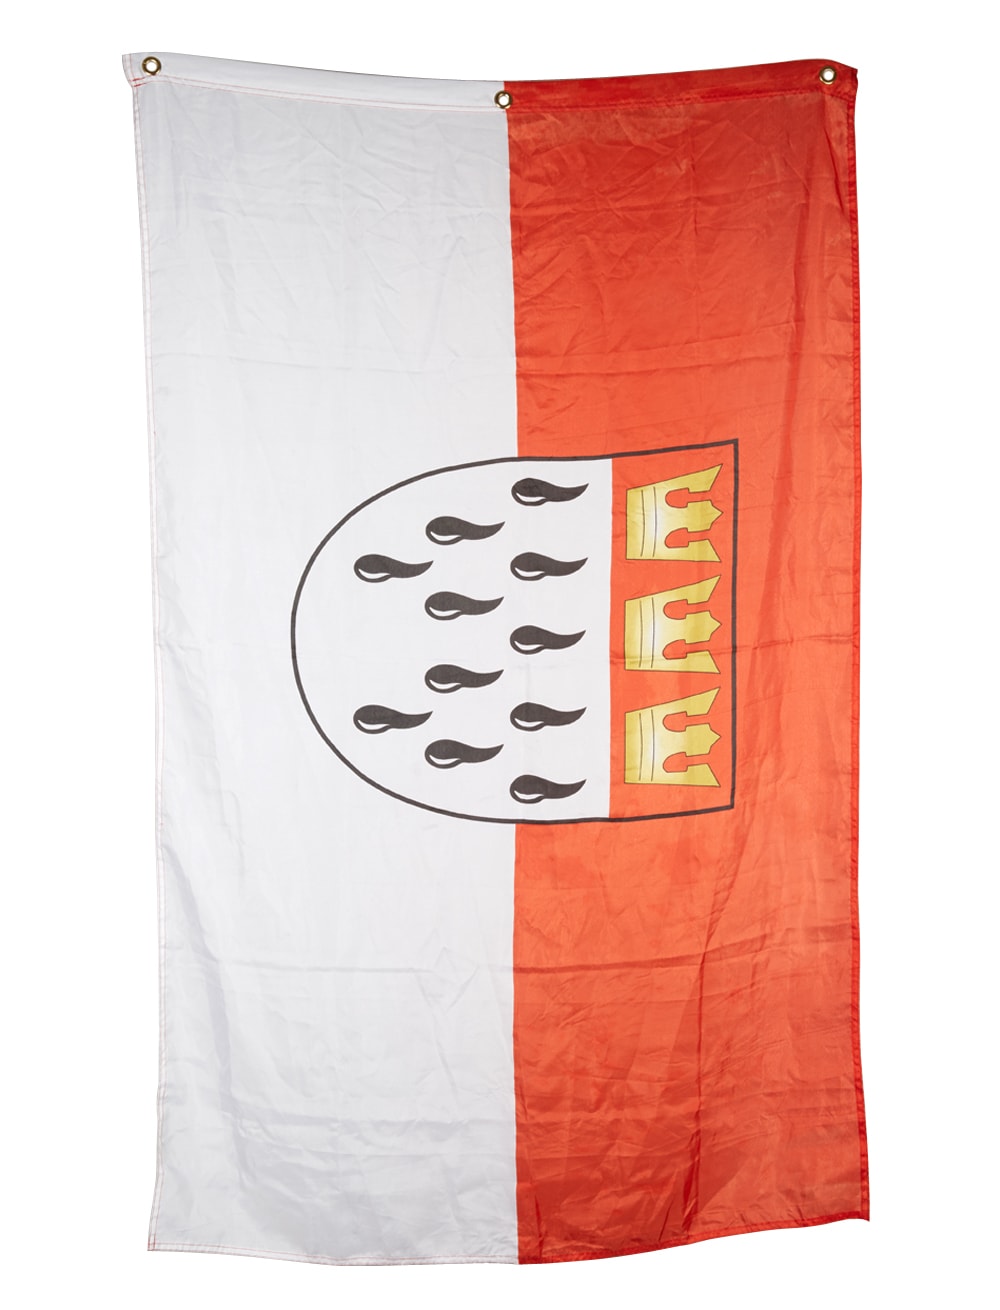 Flagge Köln Wappen 150x90cm